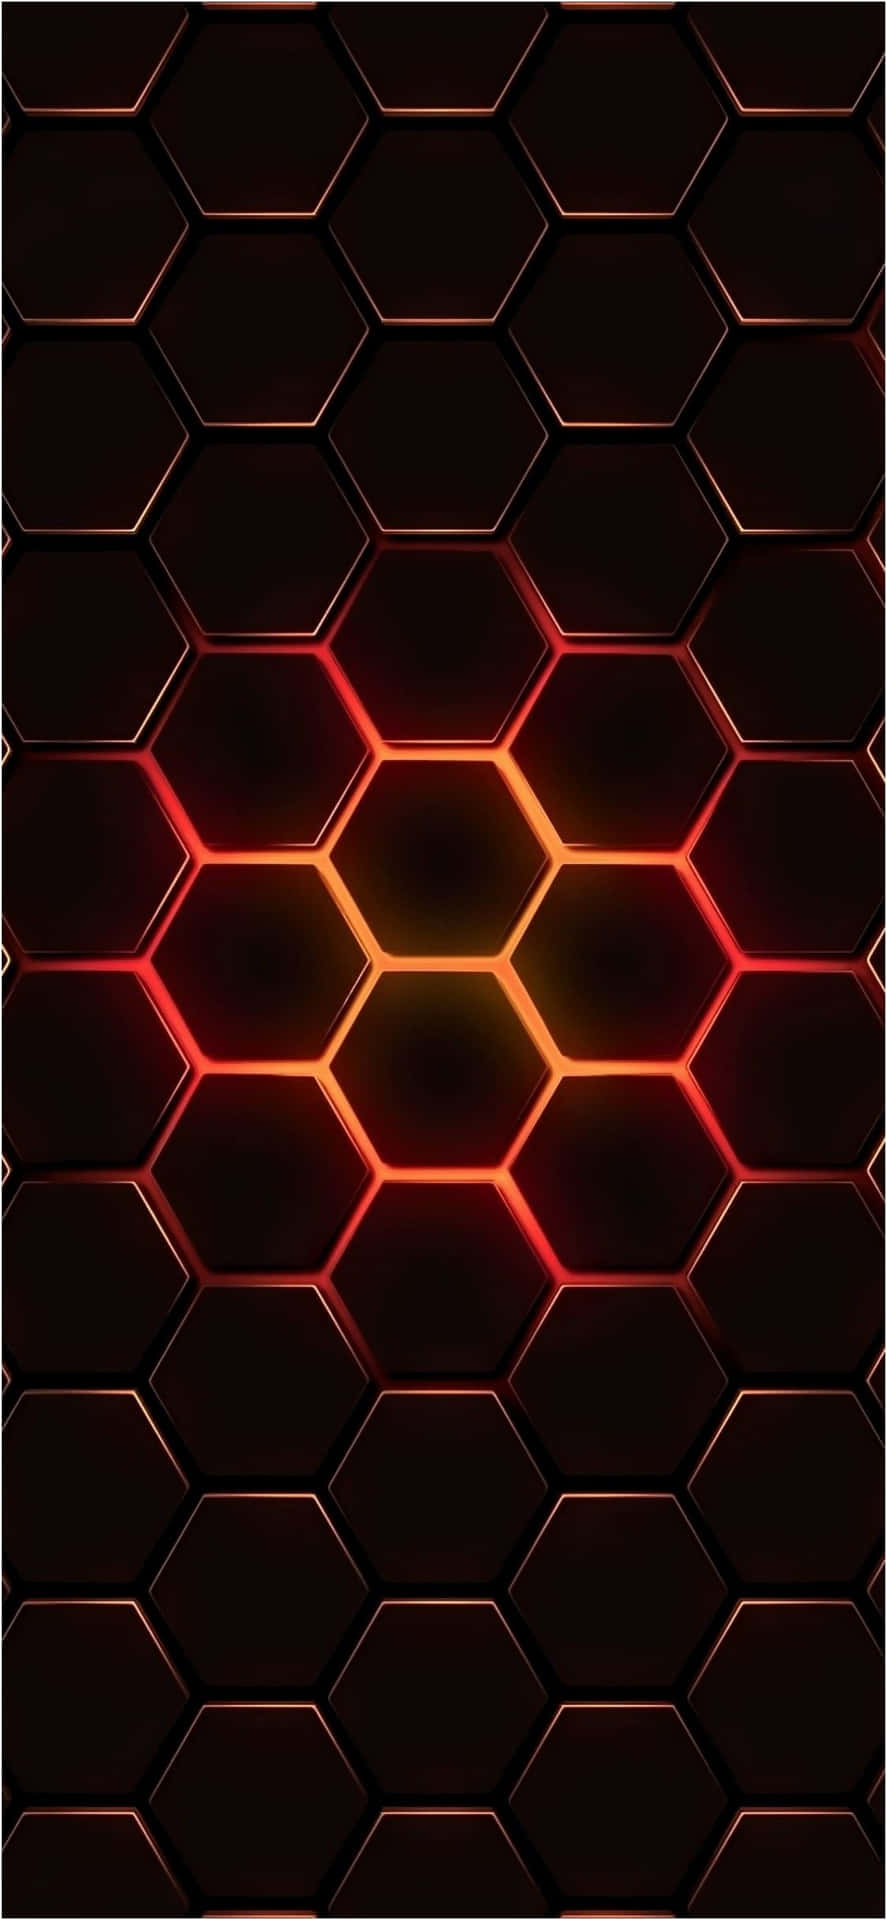 Elegant iPhone Red Aesthetic Hexagon Patterns Wallpaper